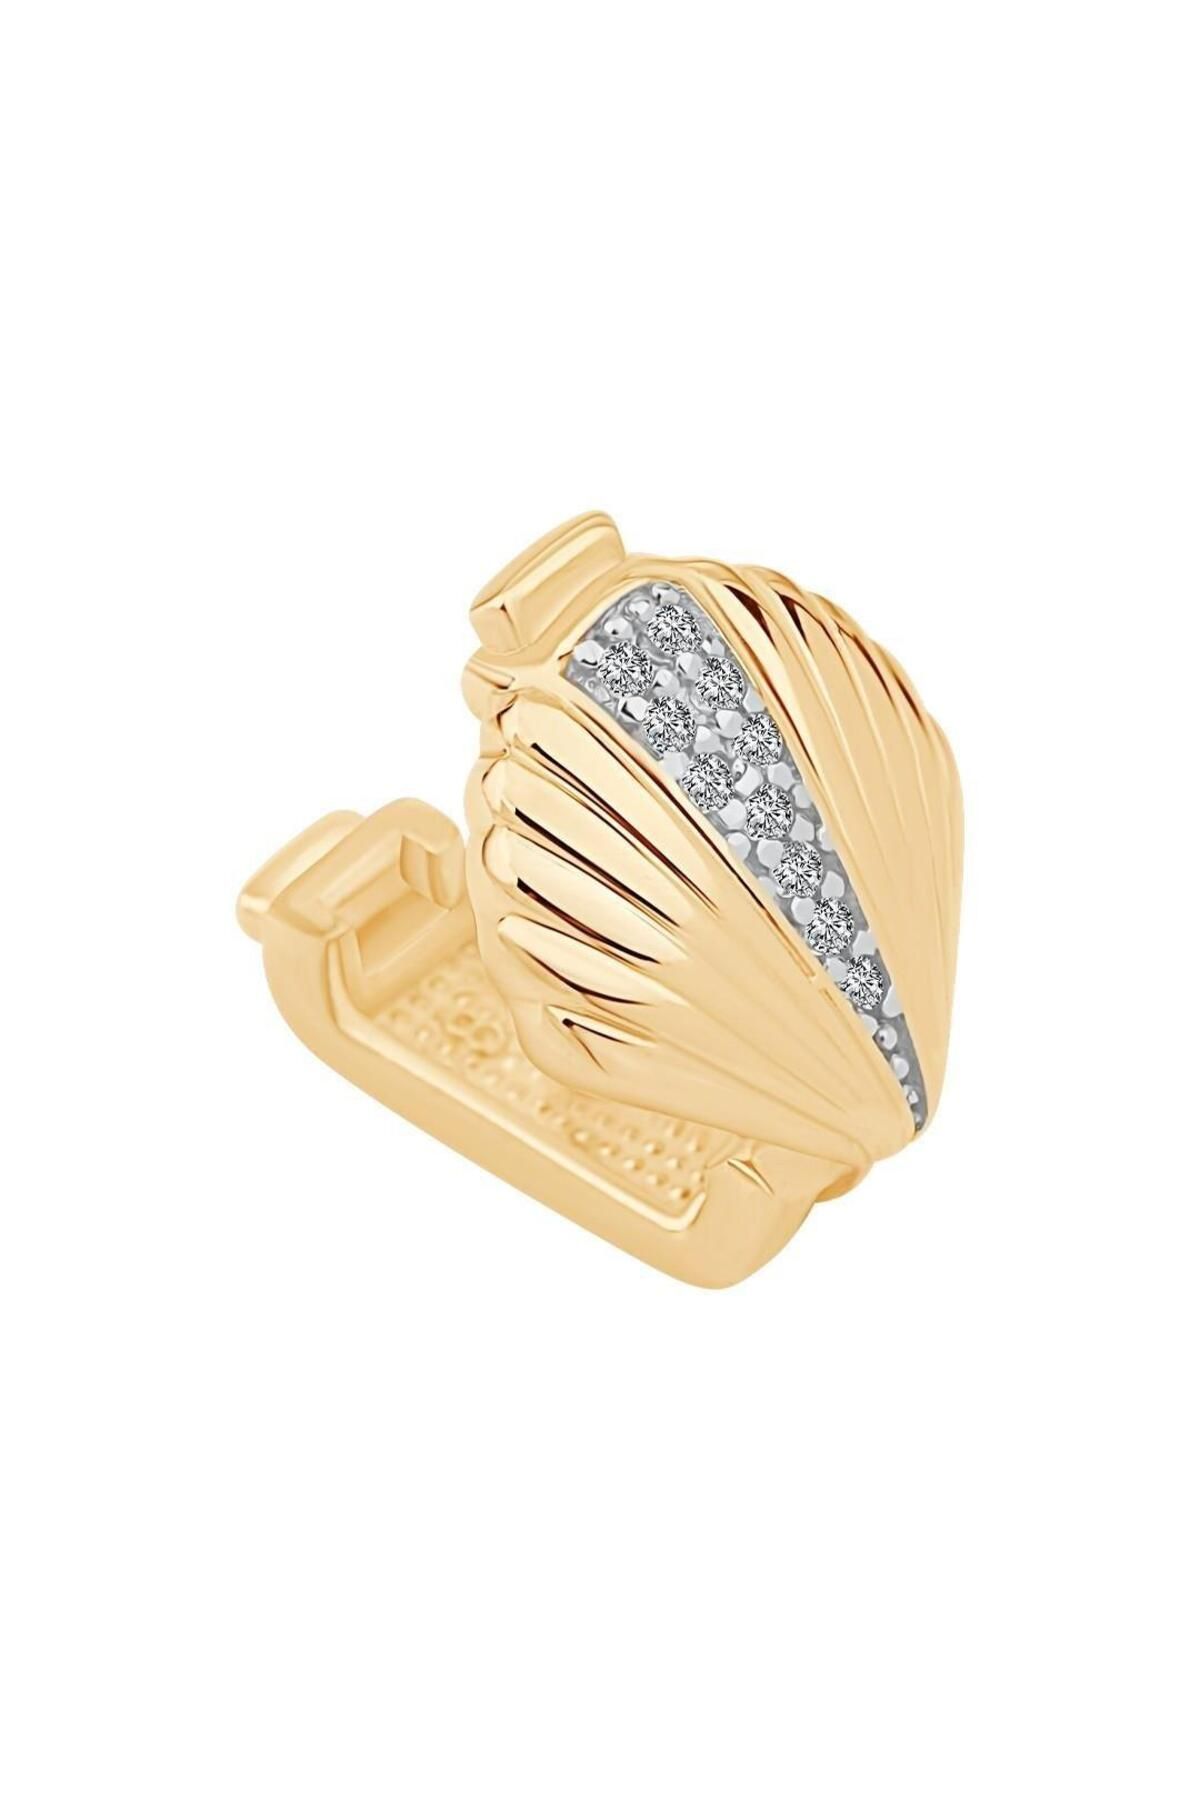 Ema Jewellery Altın Deniz Kabuğu 9mm Bileklik Charm